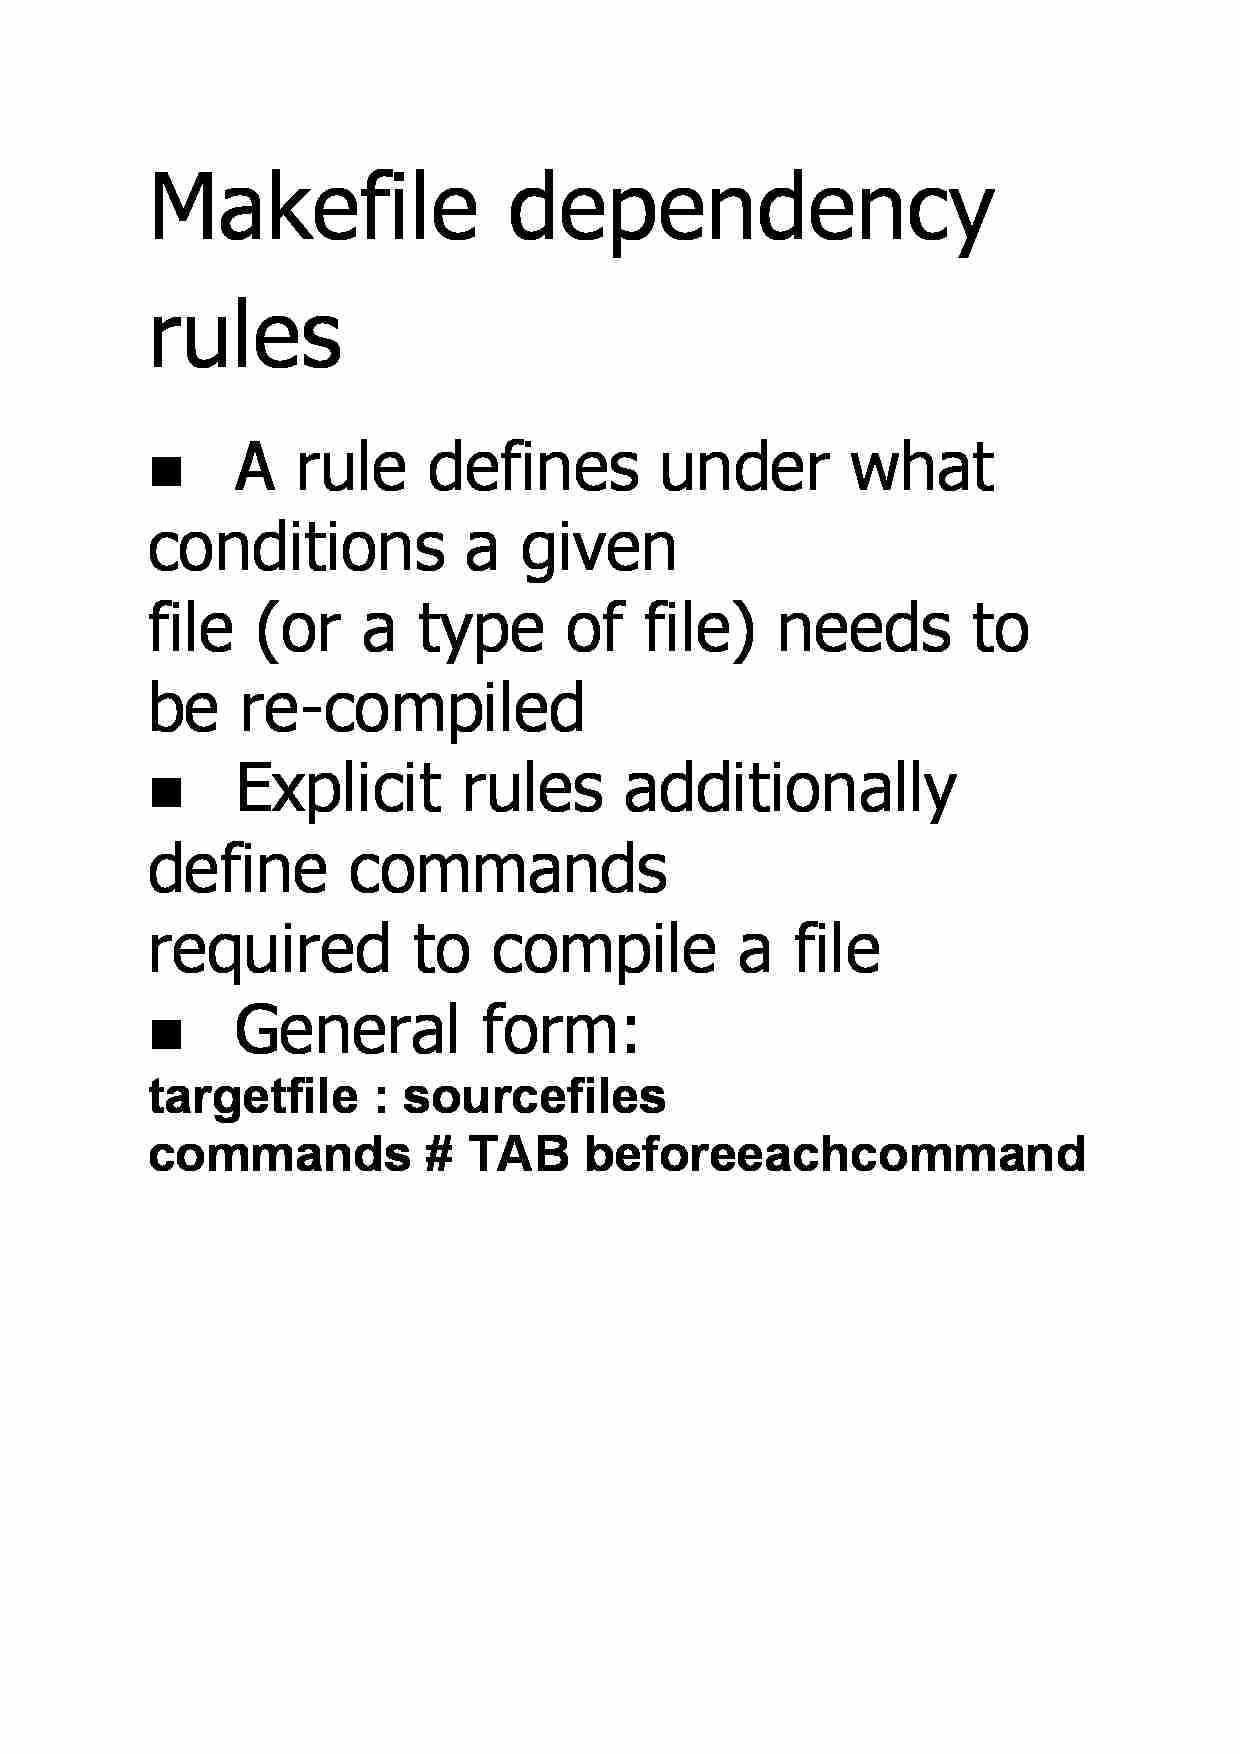 Makefile dependency rules - strona 1